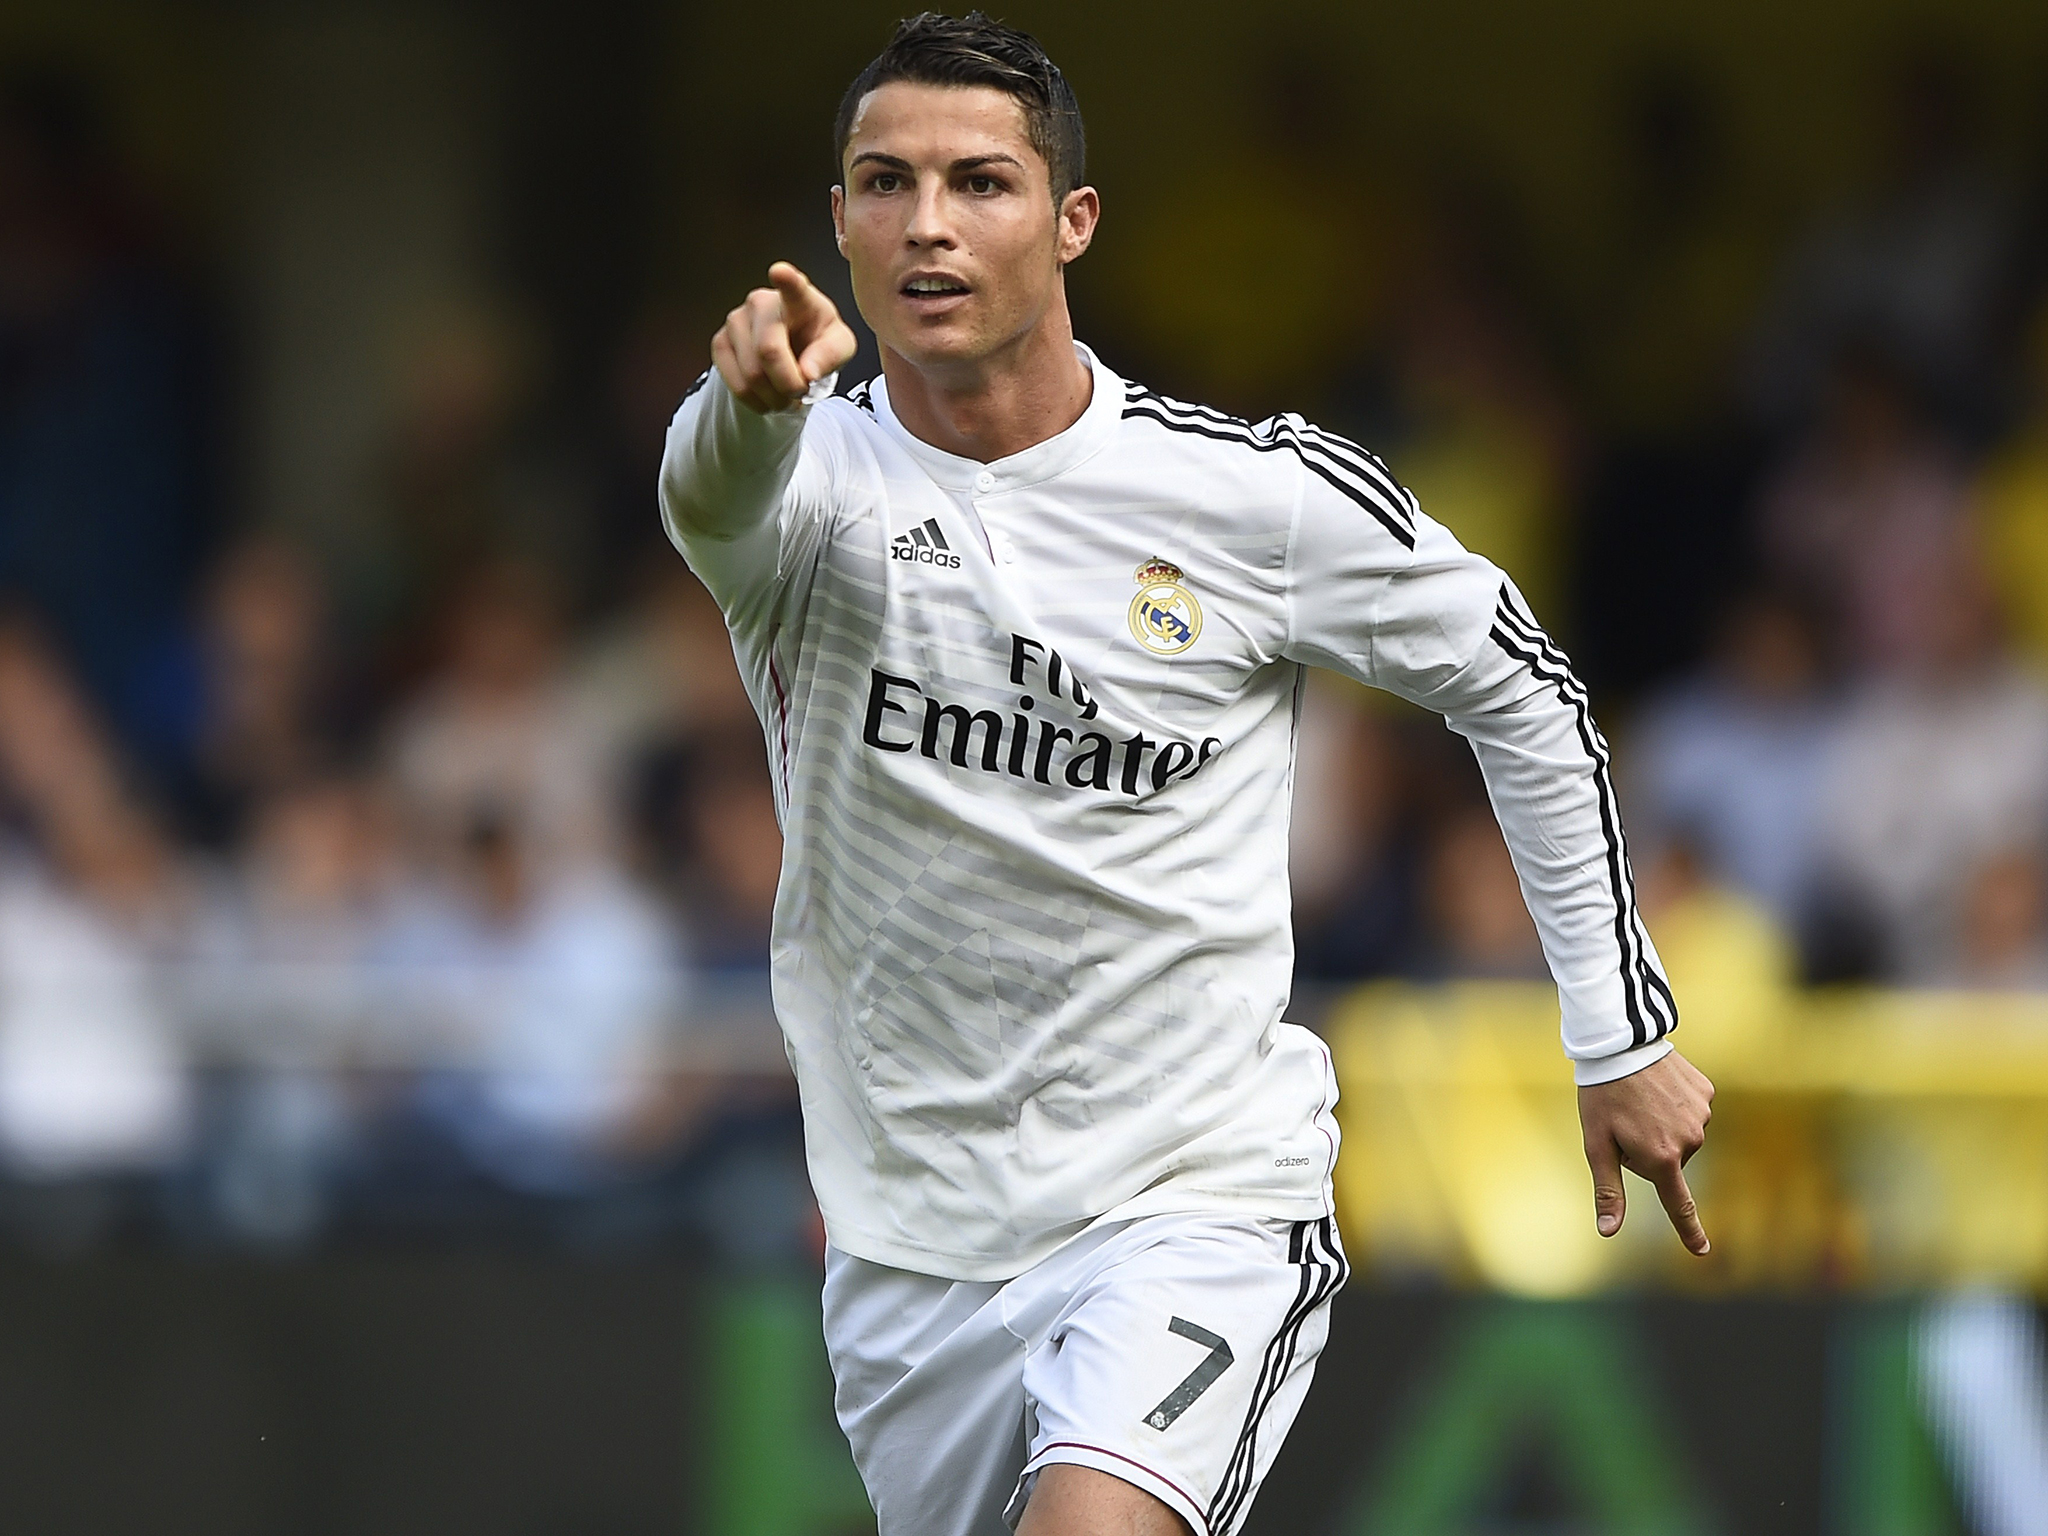 Cristiano Ronaldo nominado al premio "Quinas de Oro" de Portugal